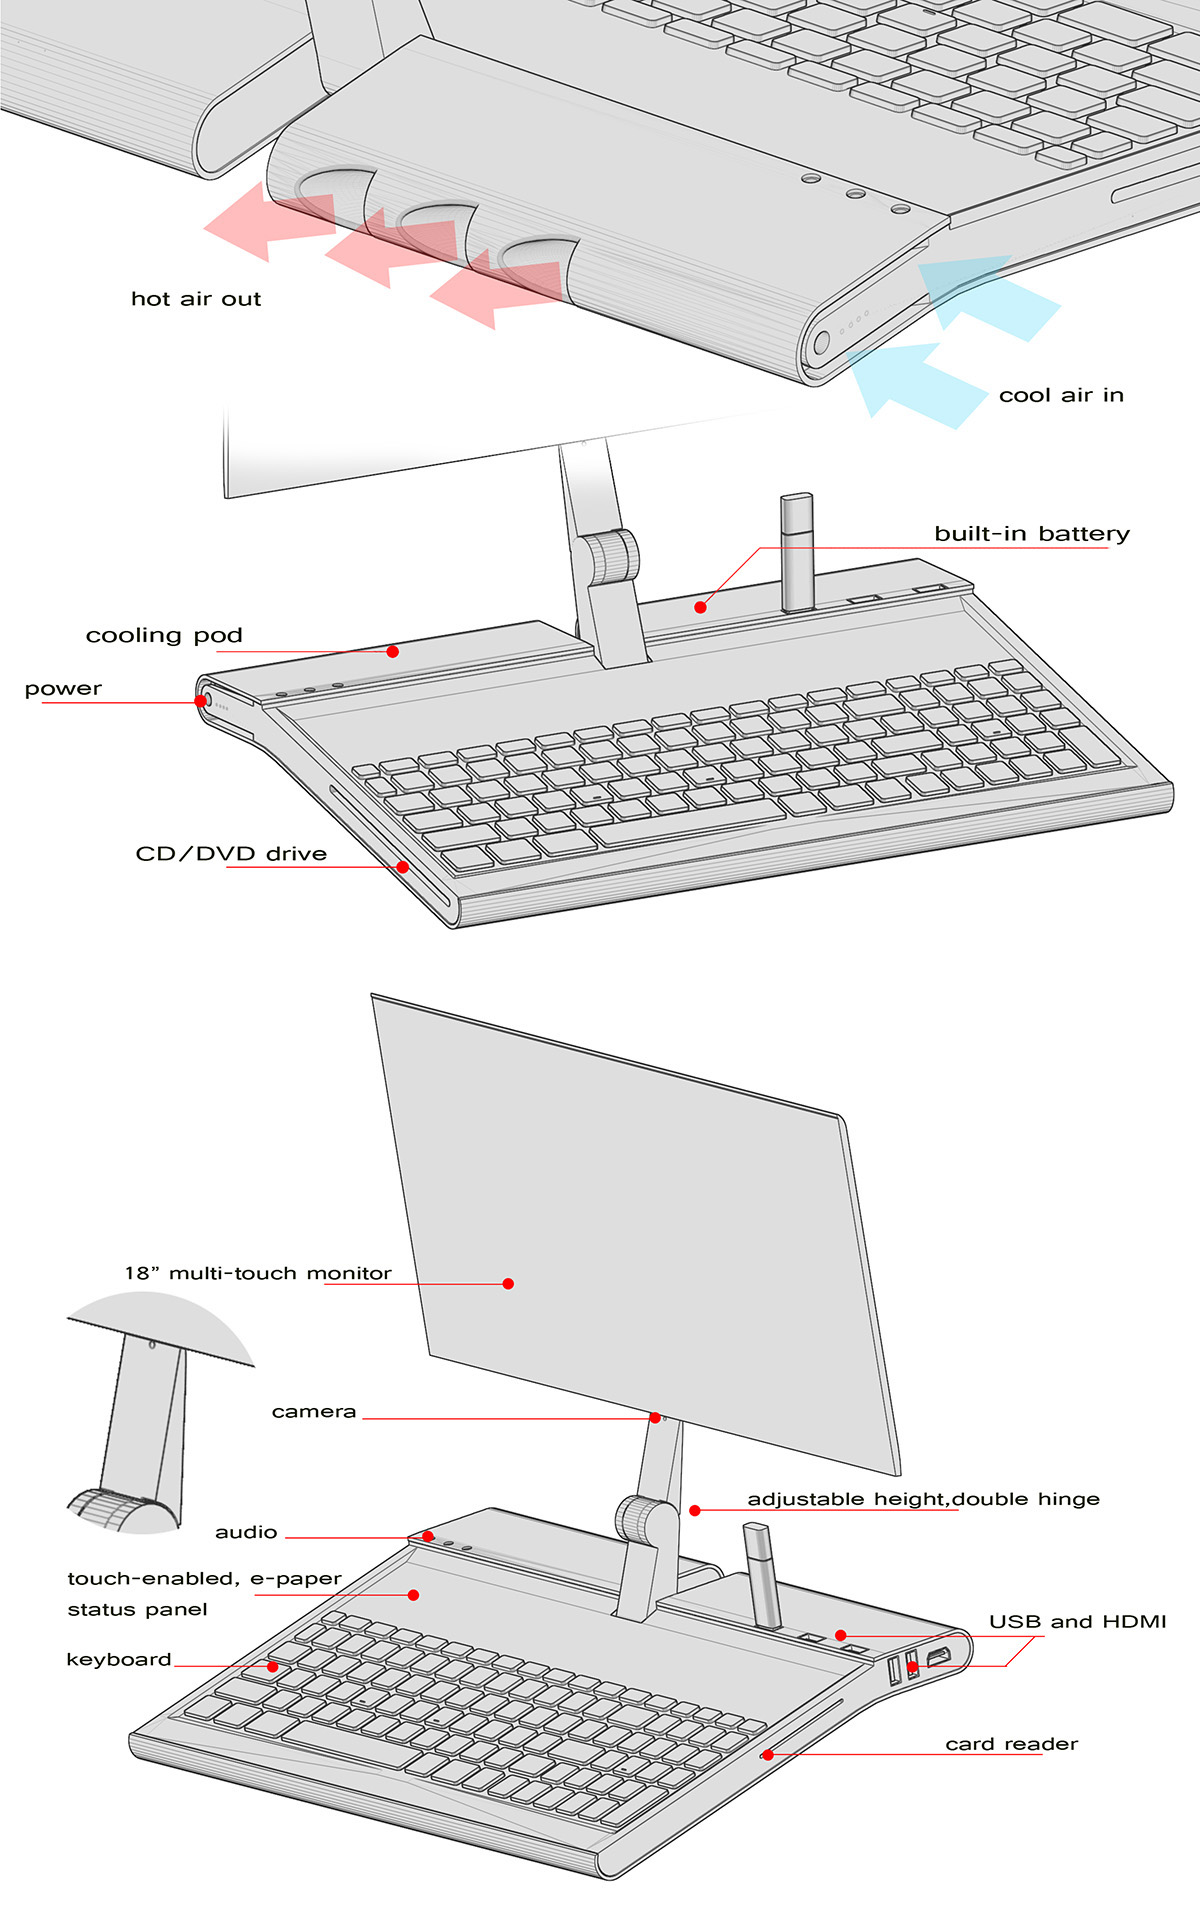 U.DTR desktop replacement  Laptop Computer innovative laptop  sitting position  ergonomic